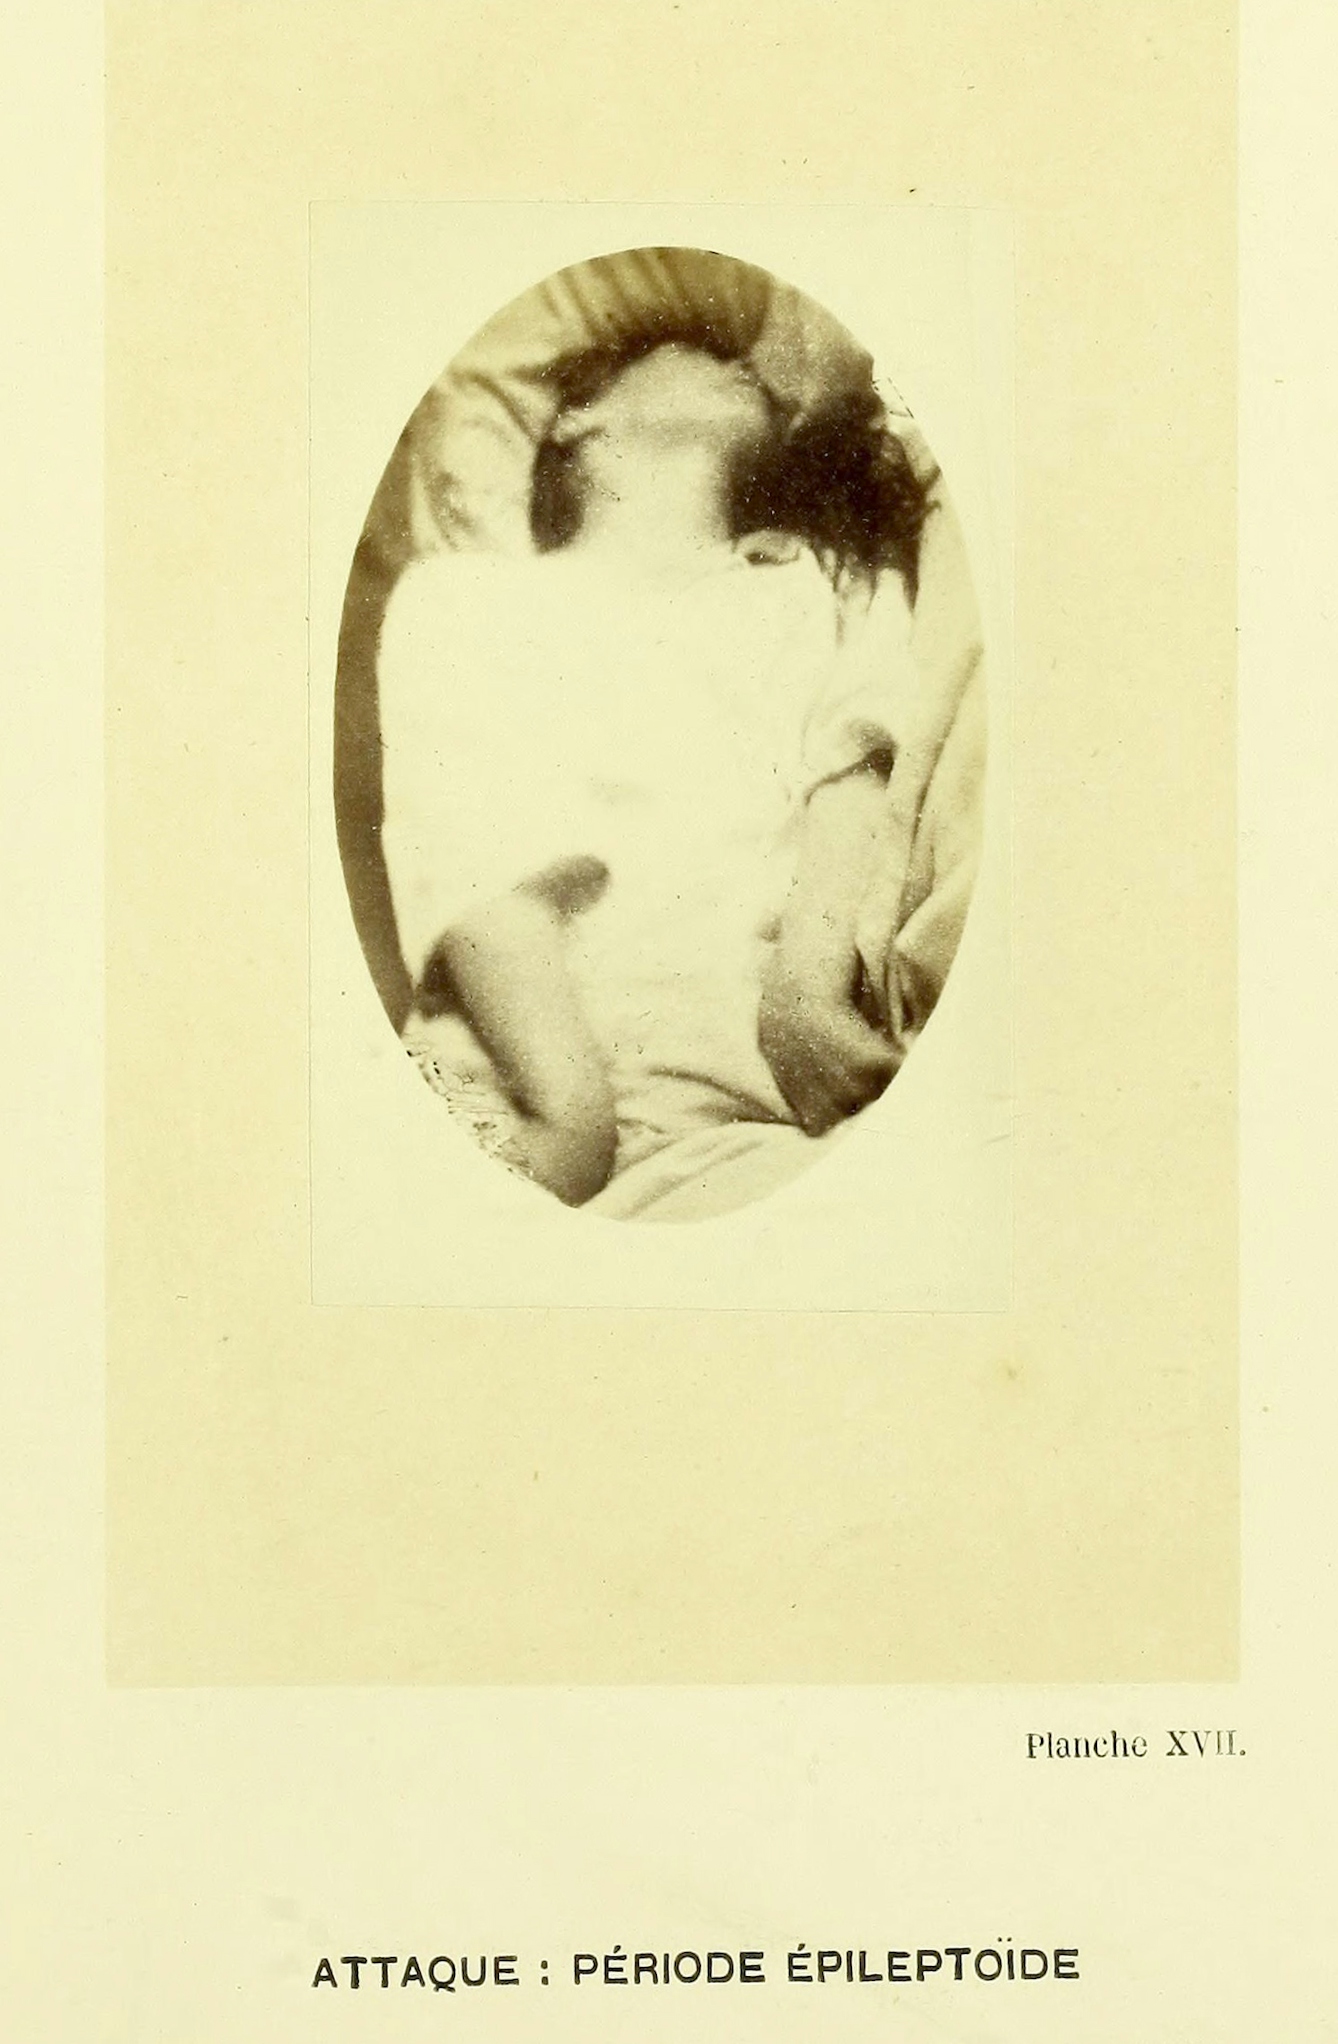 Photograph of a woman having an epileptic seizure at Saltpetriere Hospital